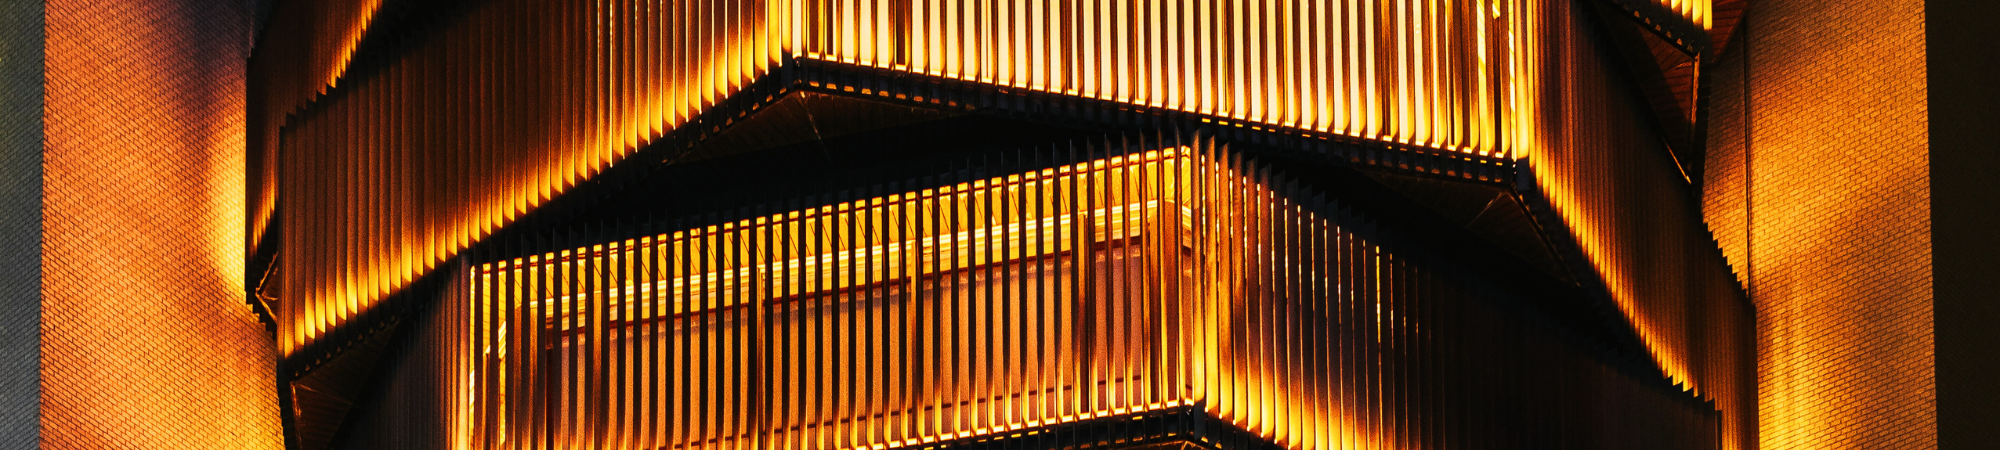 A geometric building with orange lighting